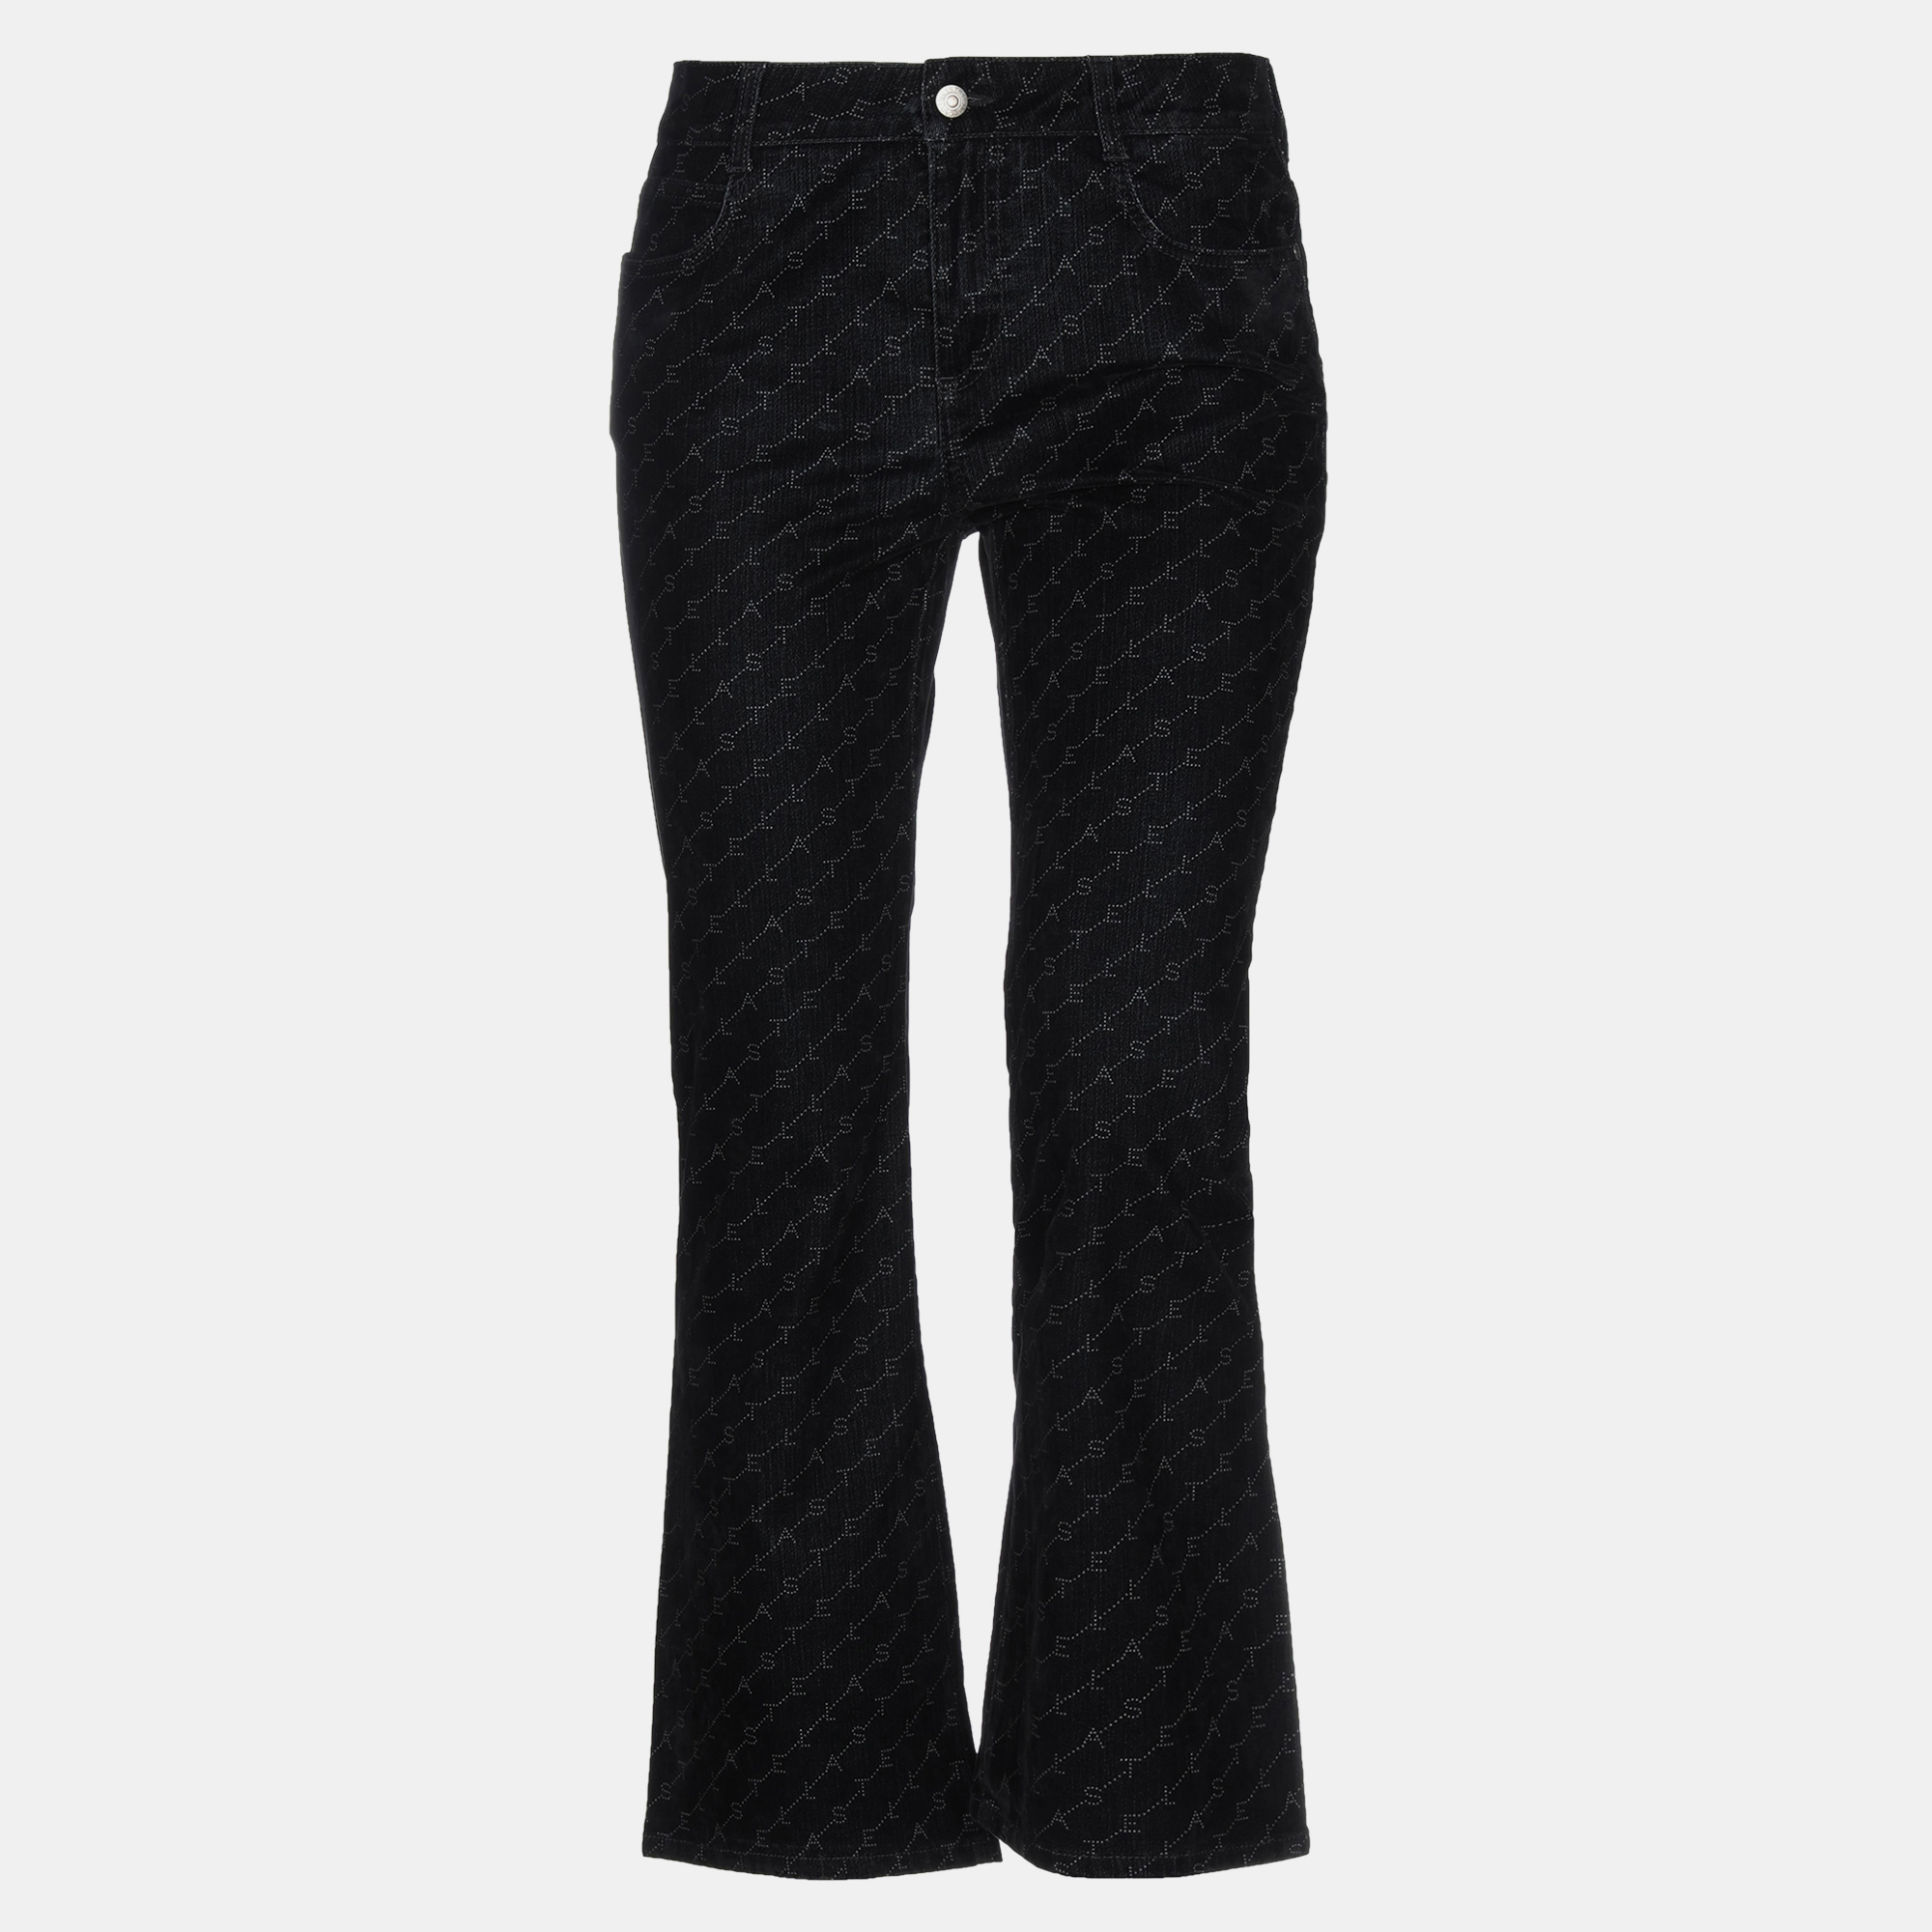 Stella mccartney black logo pattern velvet jeans s (size 25)